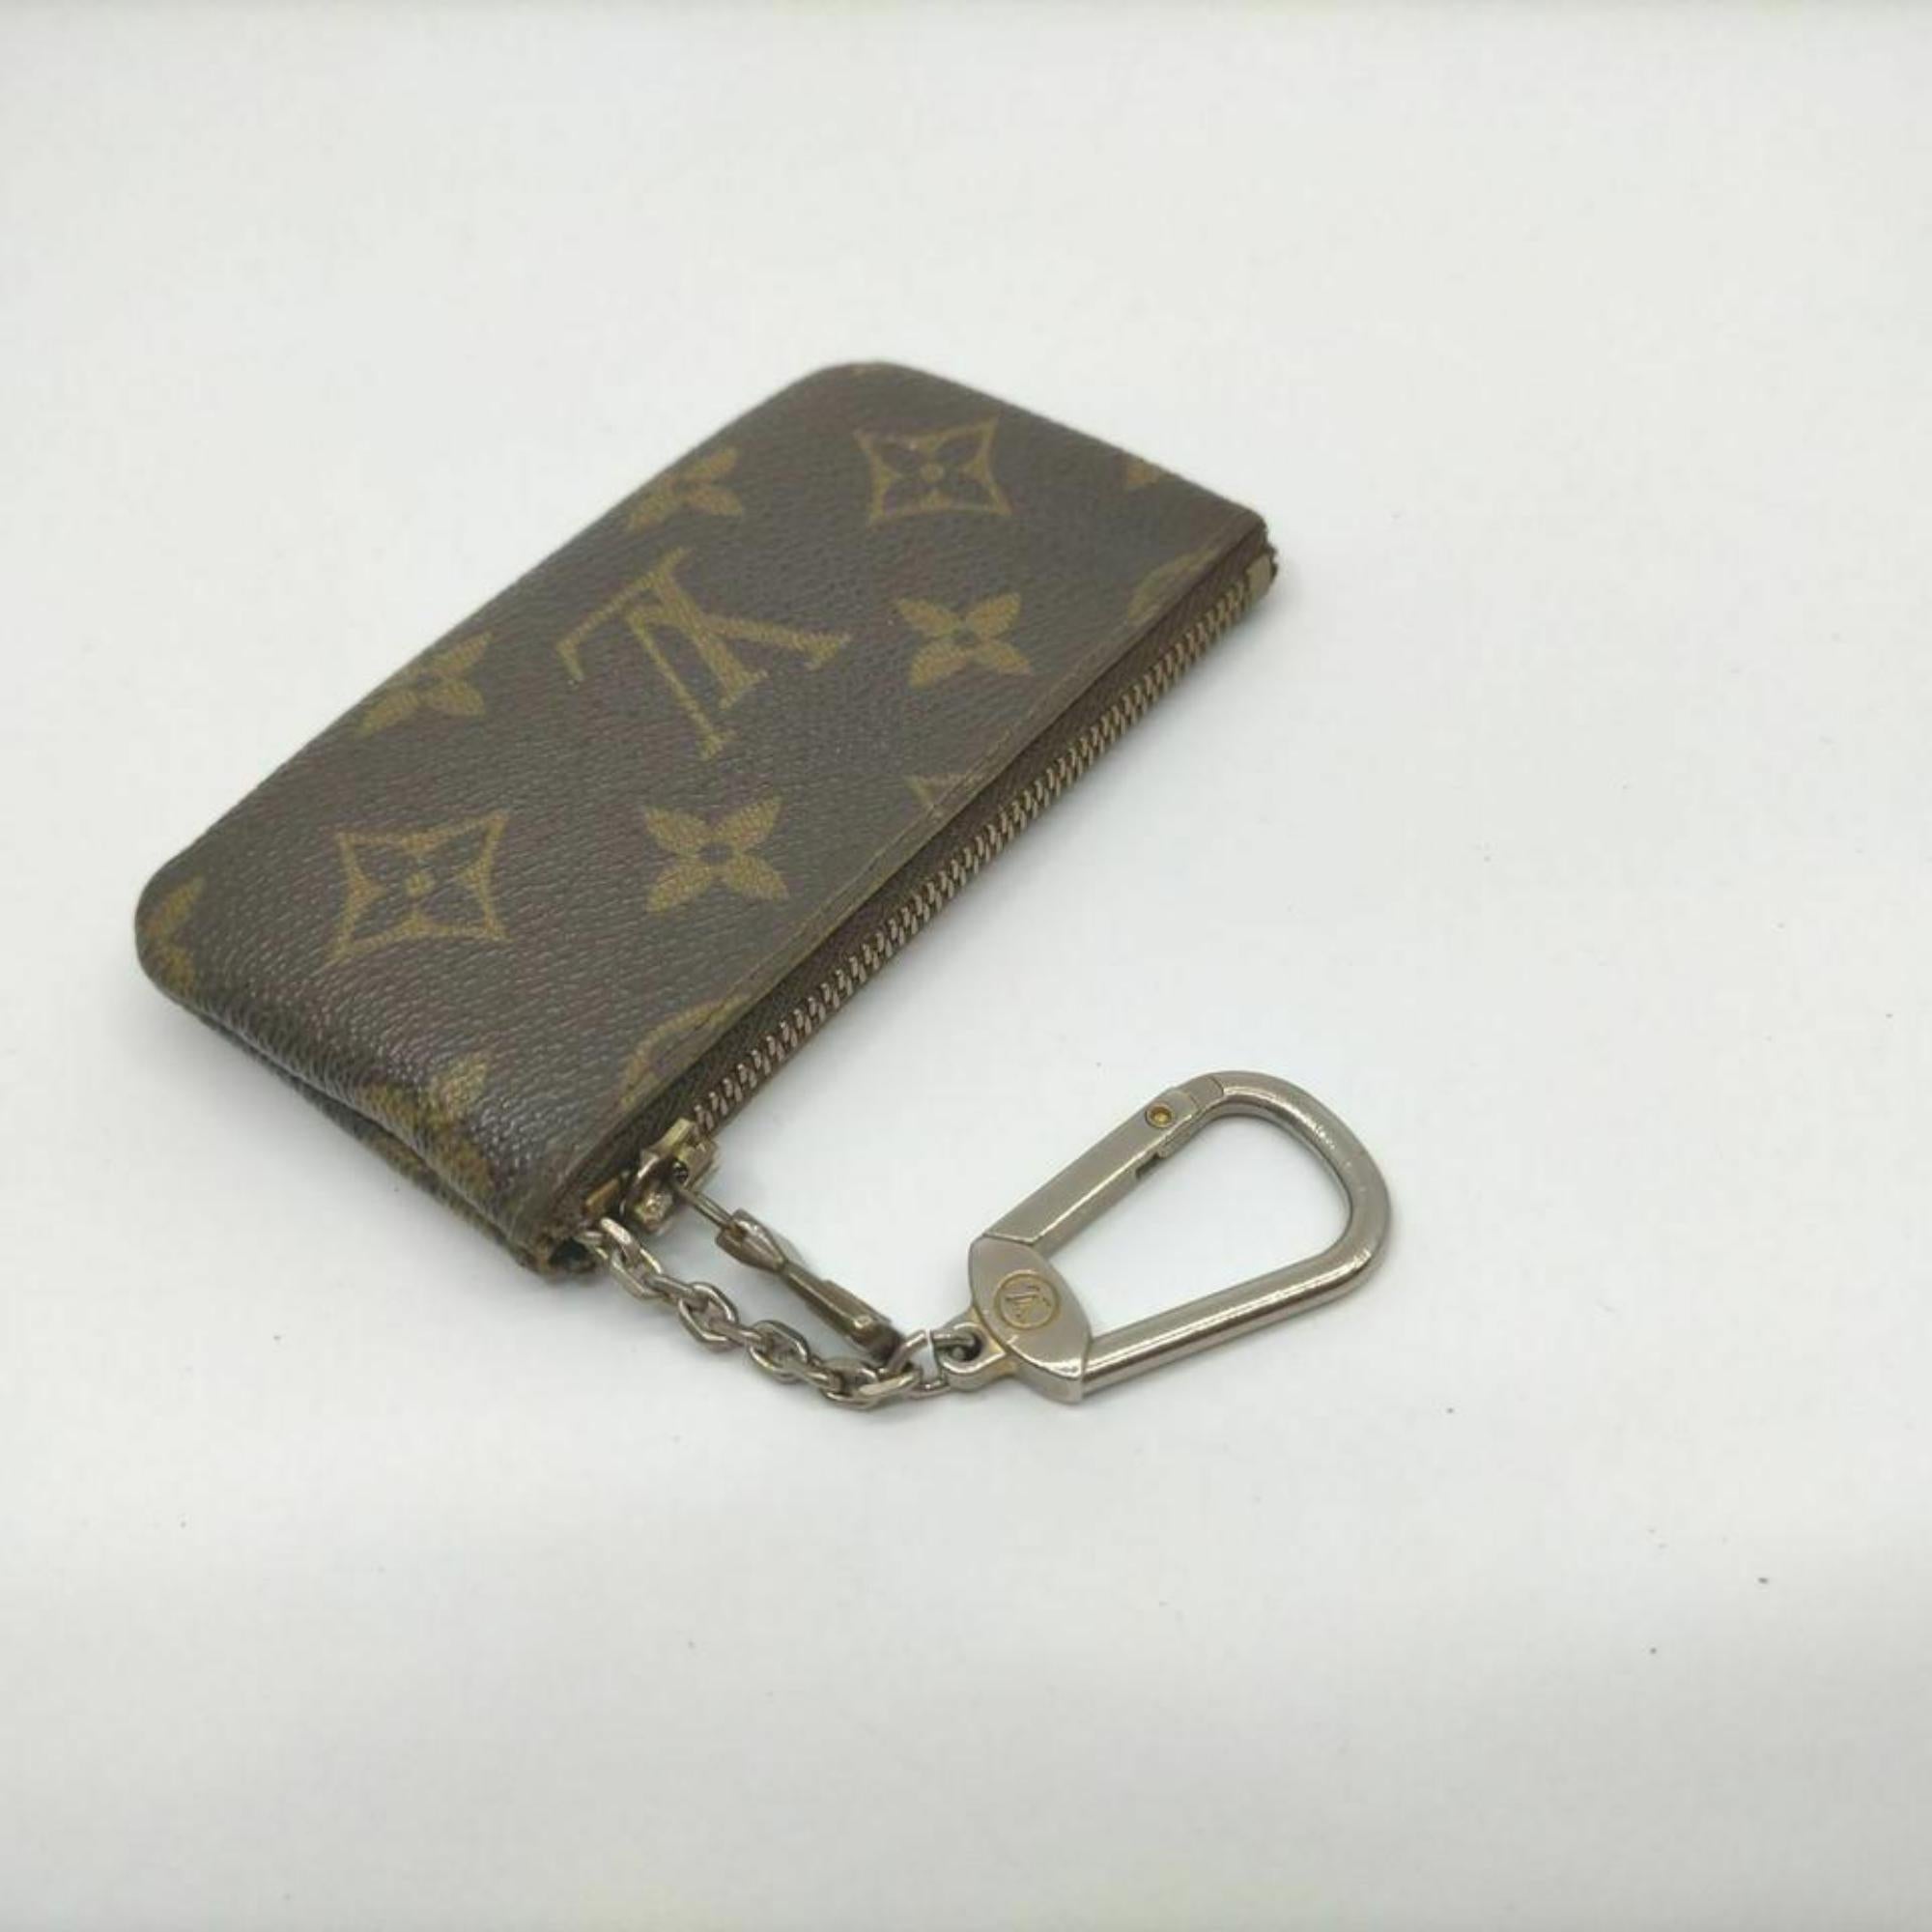 Louis Vuitton Key Pouch Coin Purse Pochette Cles Keychain 855413
Width (inch) : 4.52 inch(approx)
Width (cm) : 11.5 cm(approx)
Height (inch) : 2.55 inch(approx)
Height (cm) : 6.5 cm(approx)
Depth (inch) : 0.39 inch(approx)
Depth (cm) : 1